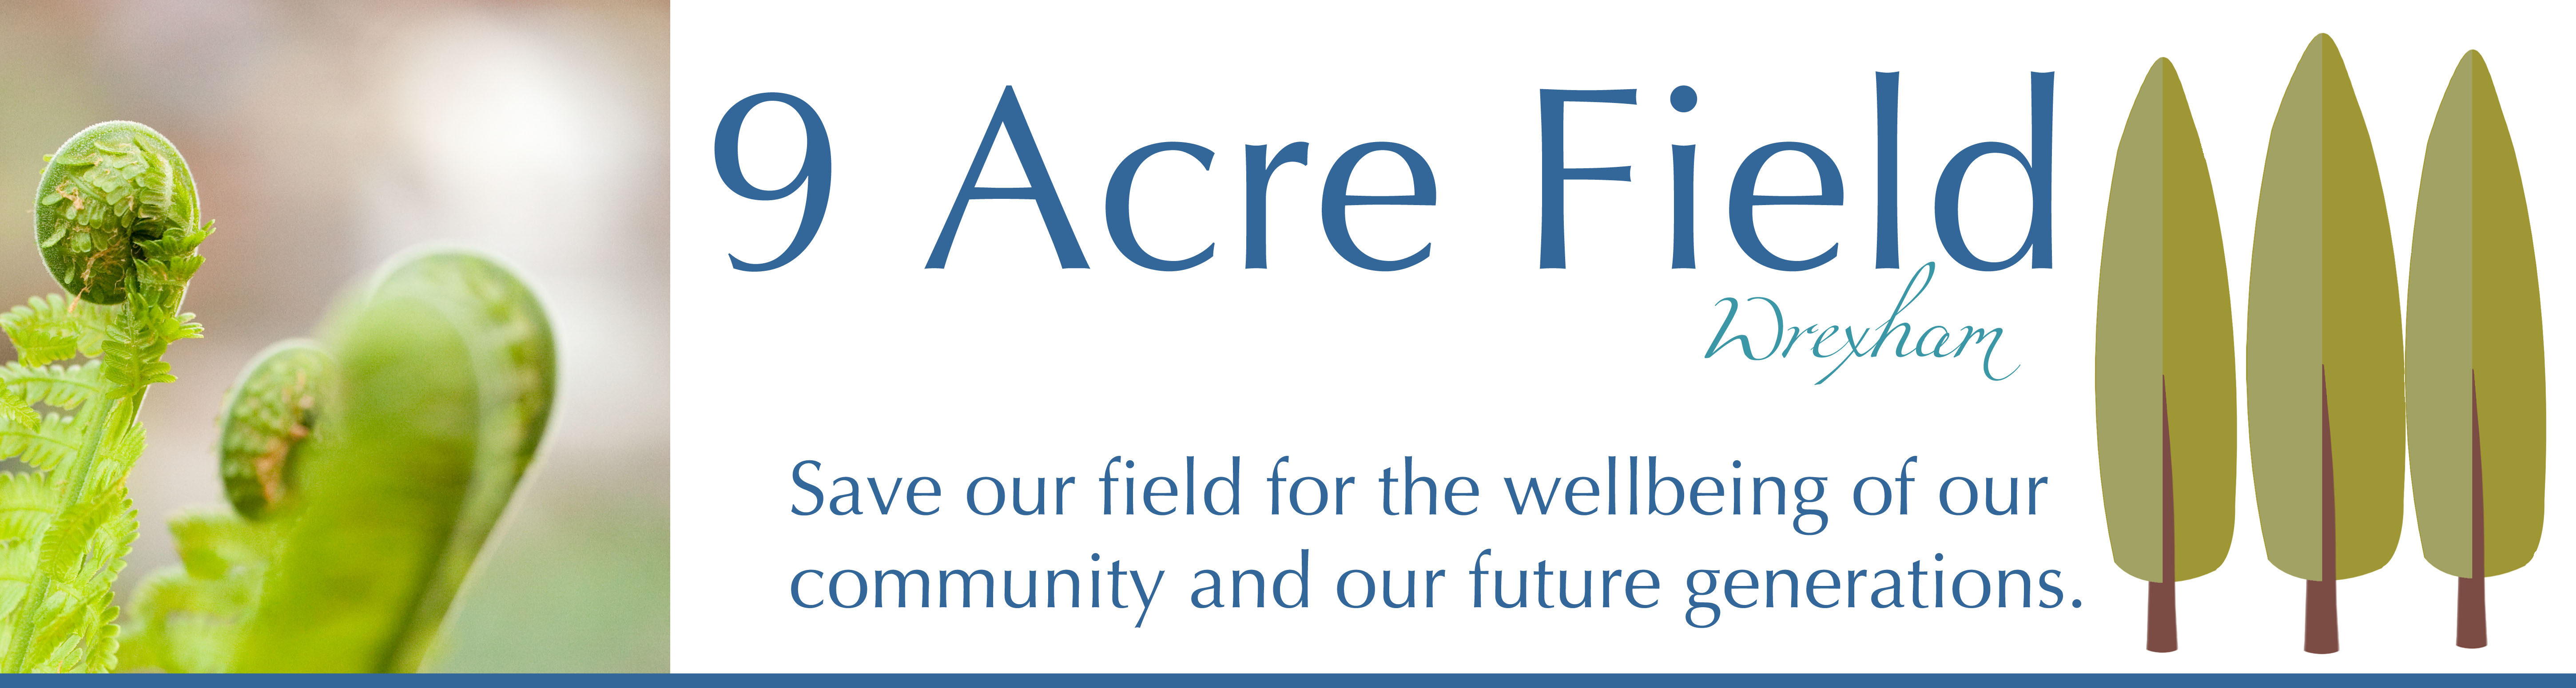 Nine Acre Field Campaign